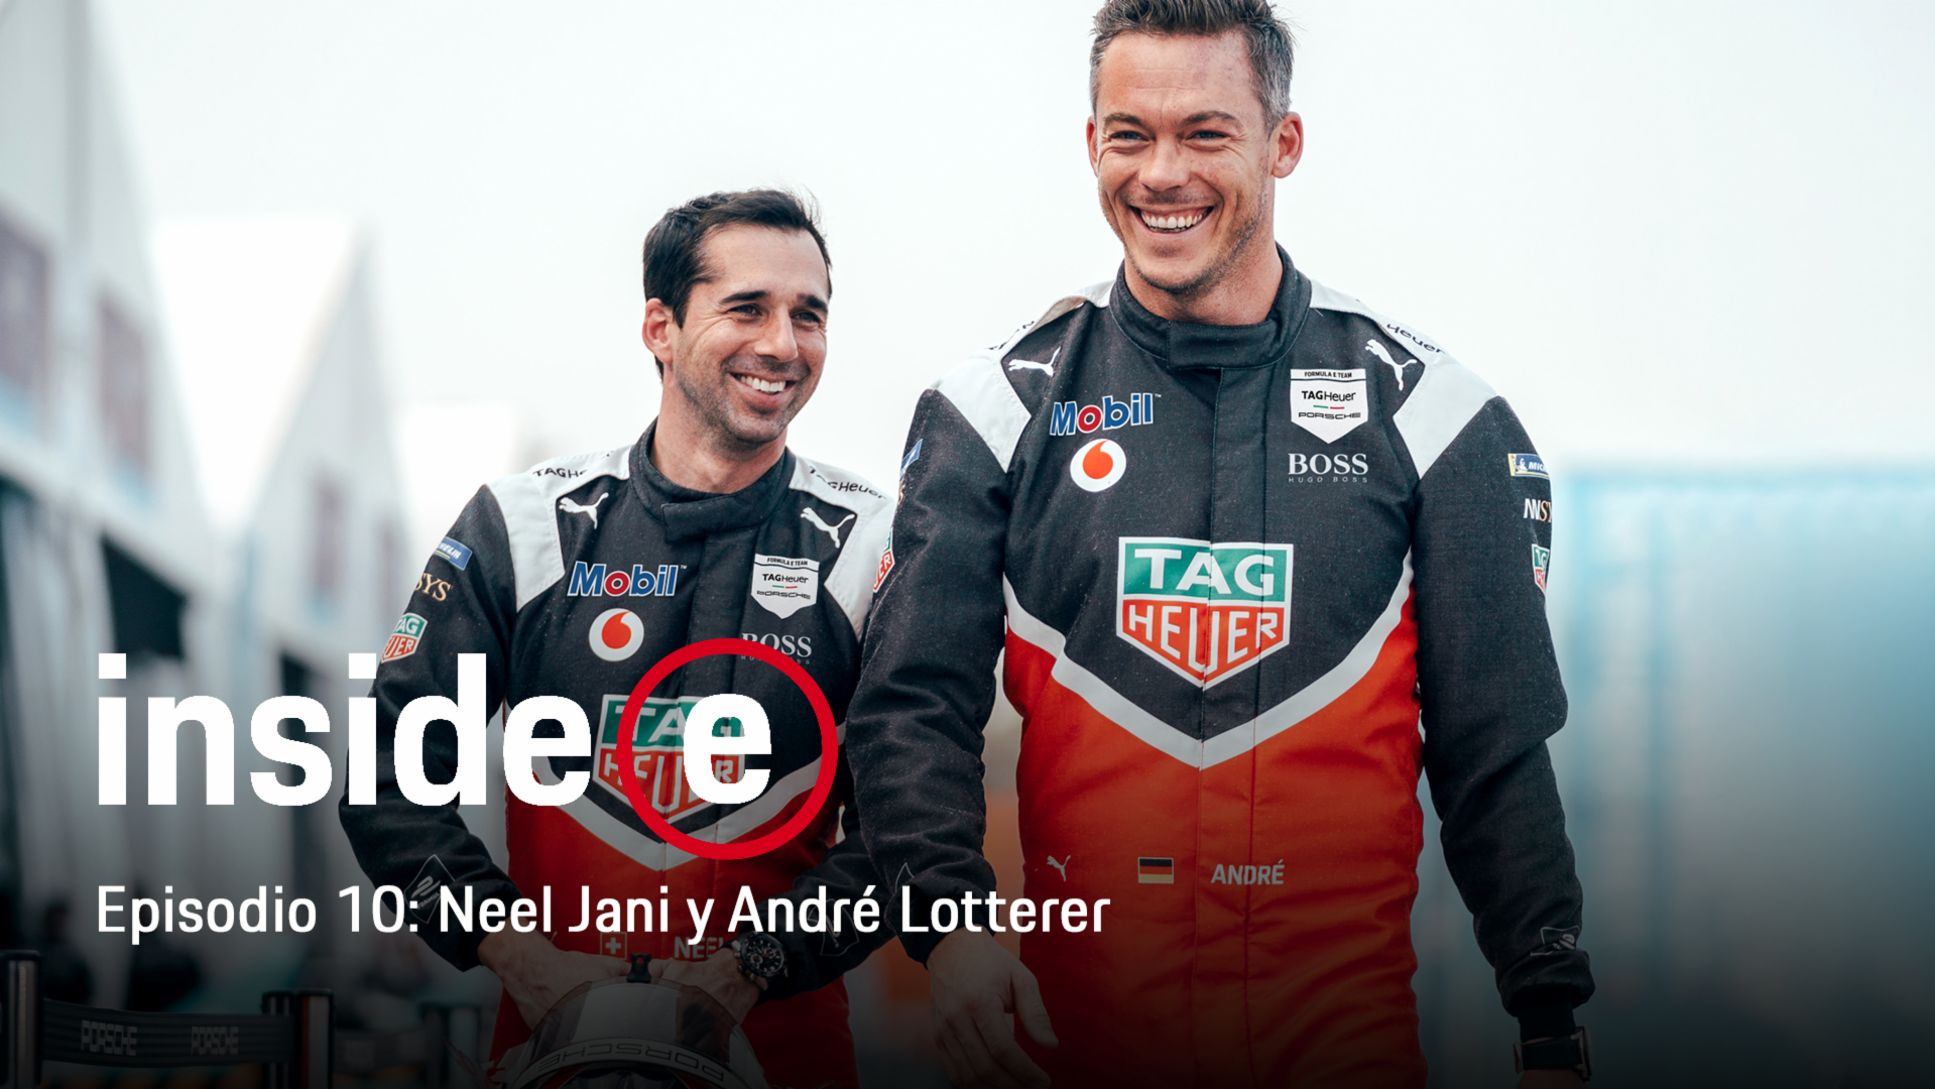  Podcast “Inside E”, episodio 10 con Neel Jani y André Lotterer (i-d), 2020, Porsche AG